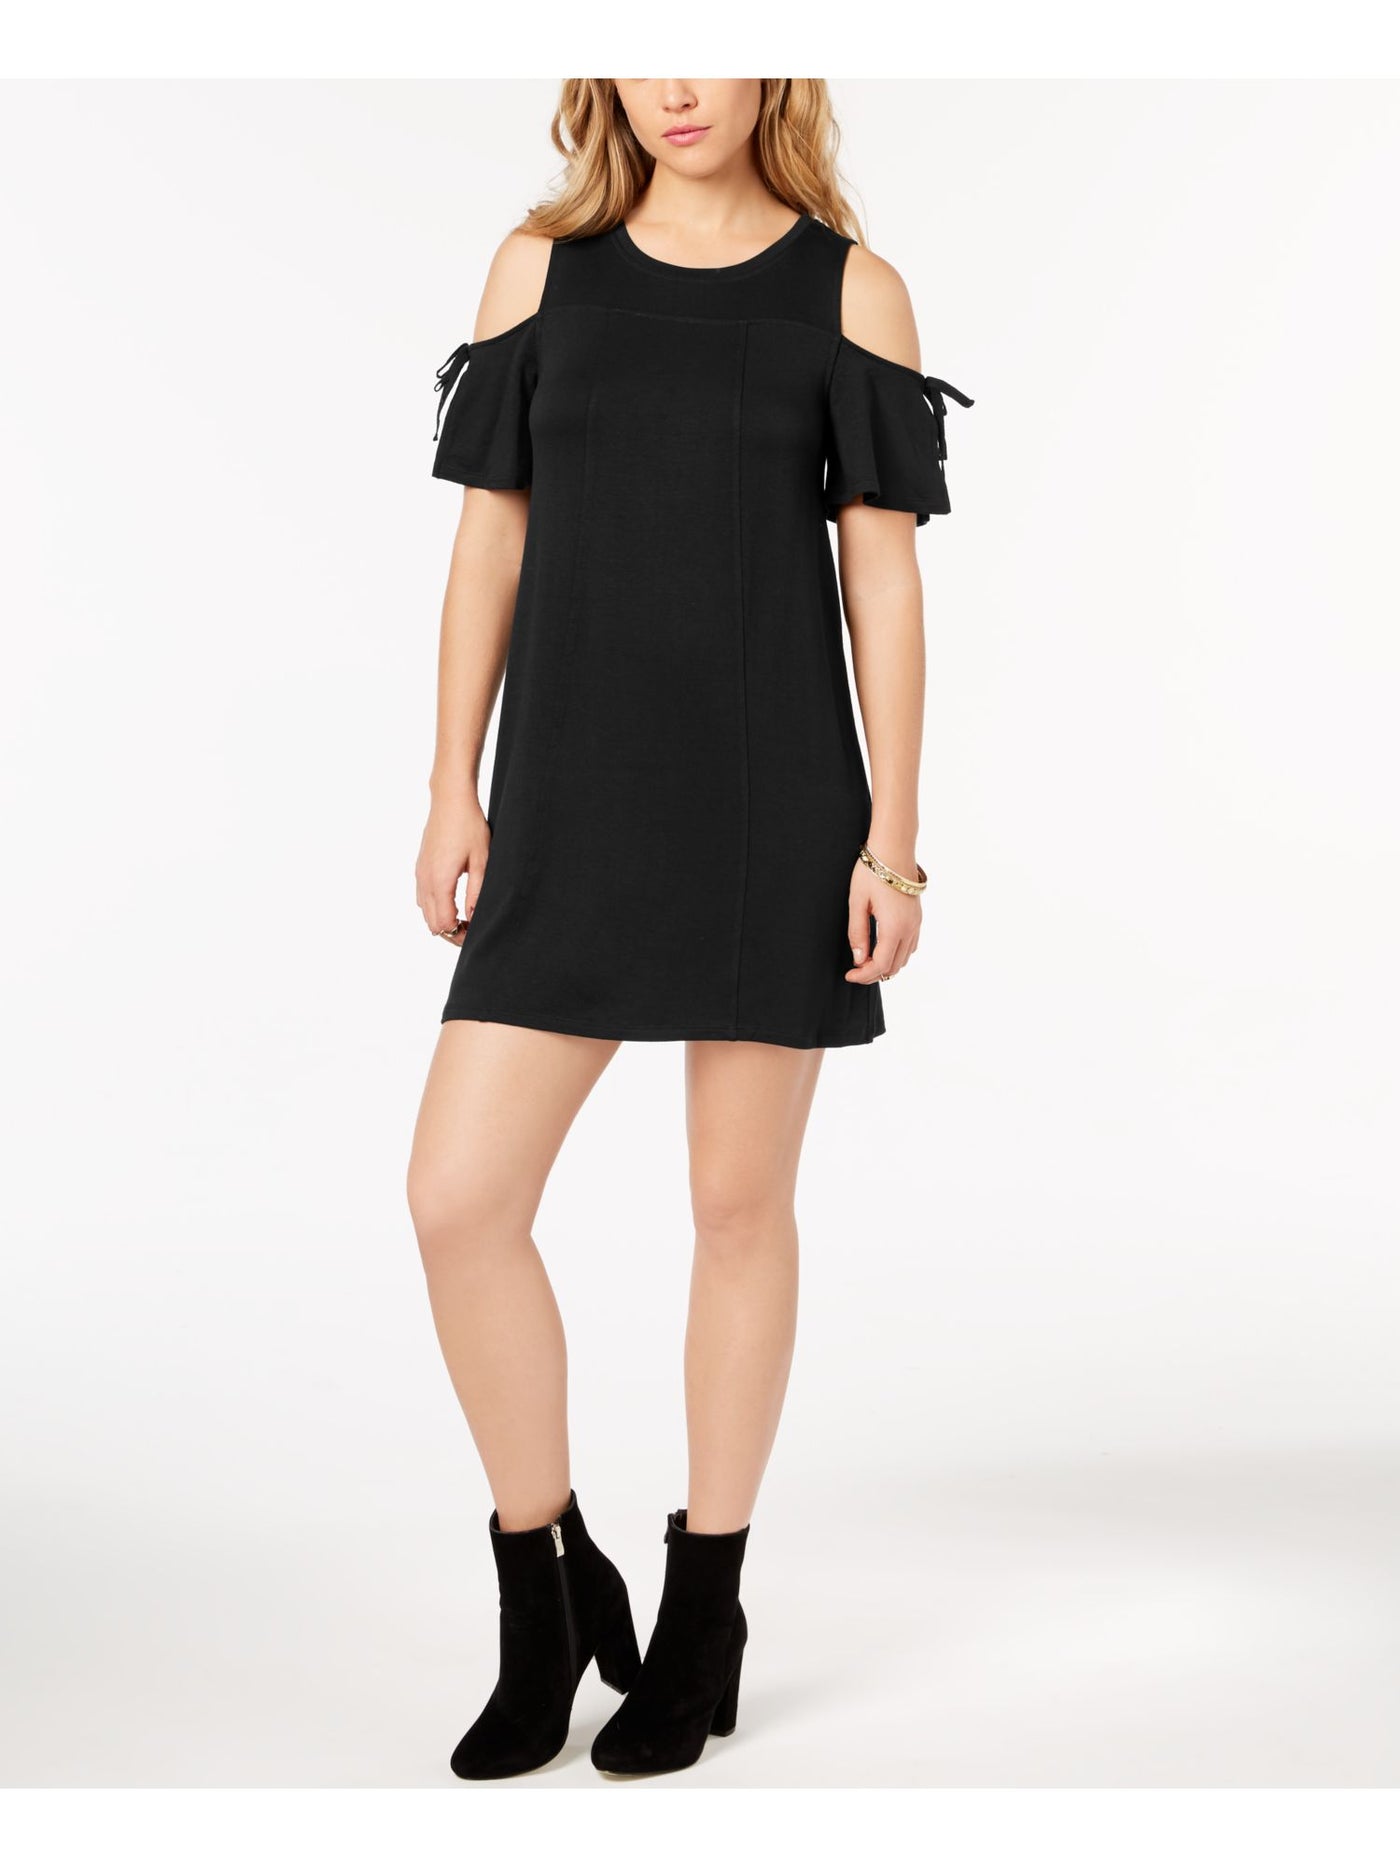 KENSIE Womens Black Cold Shoulder Short Sleeve Jewel Neck Mini Shift Dress S